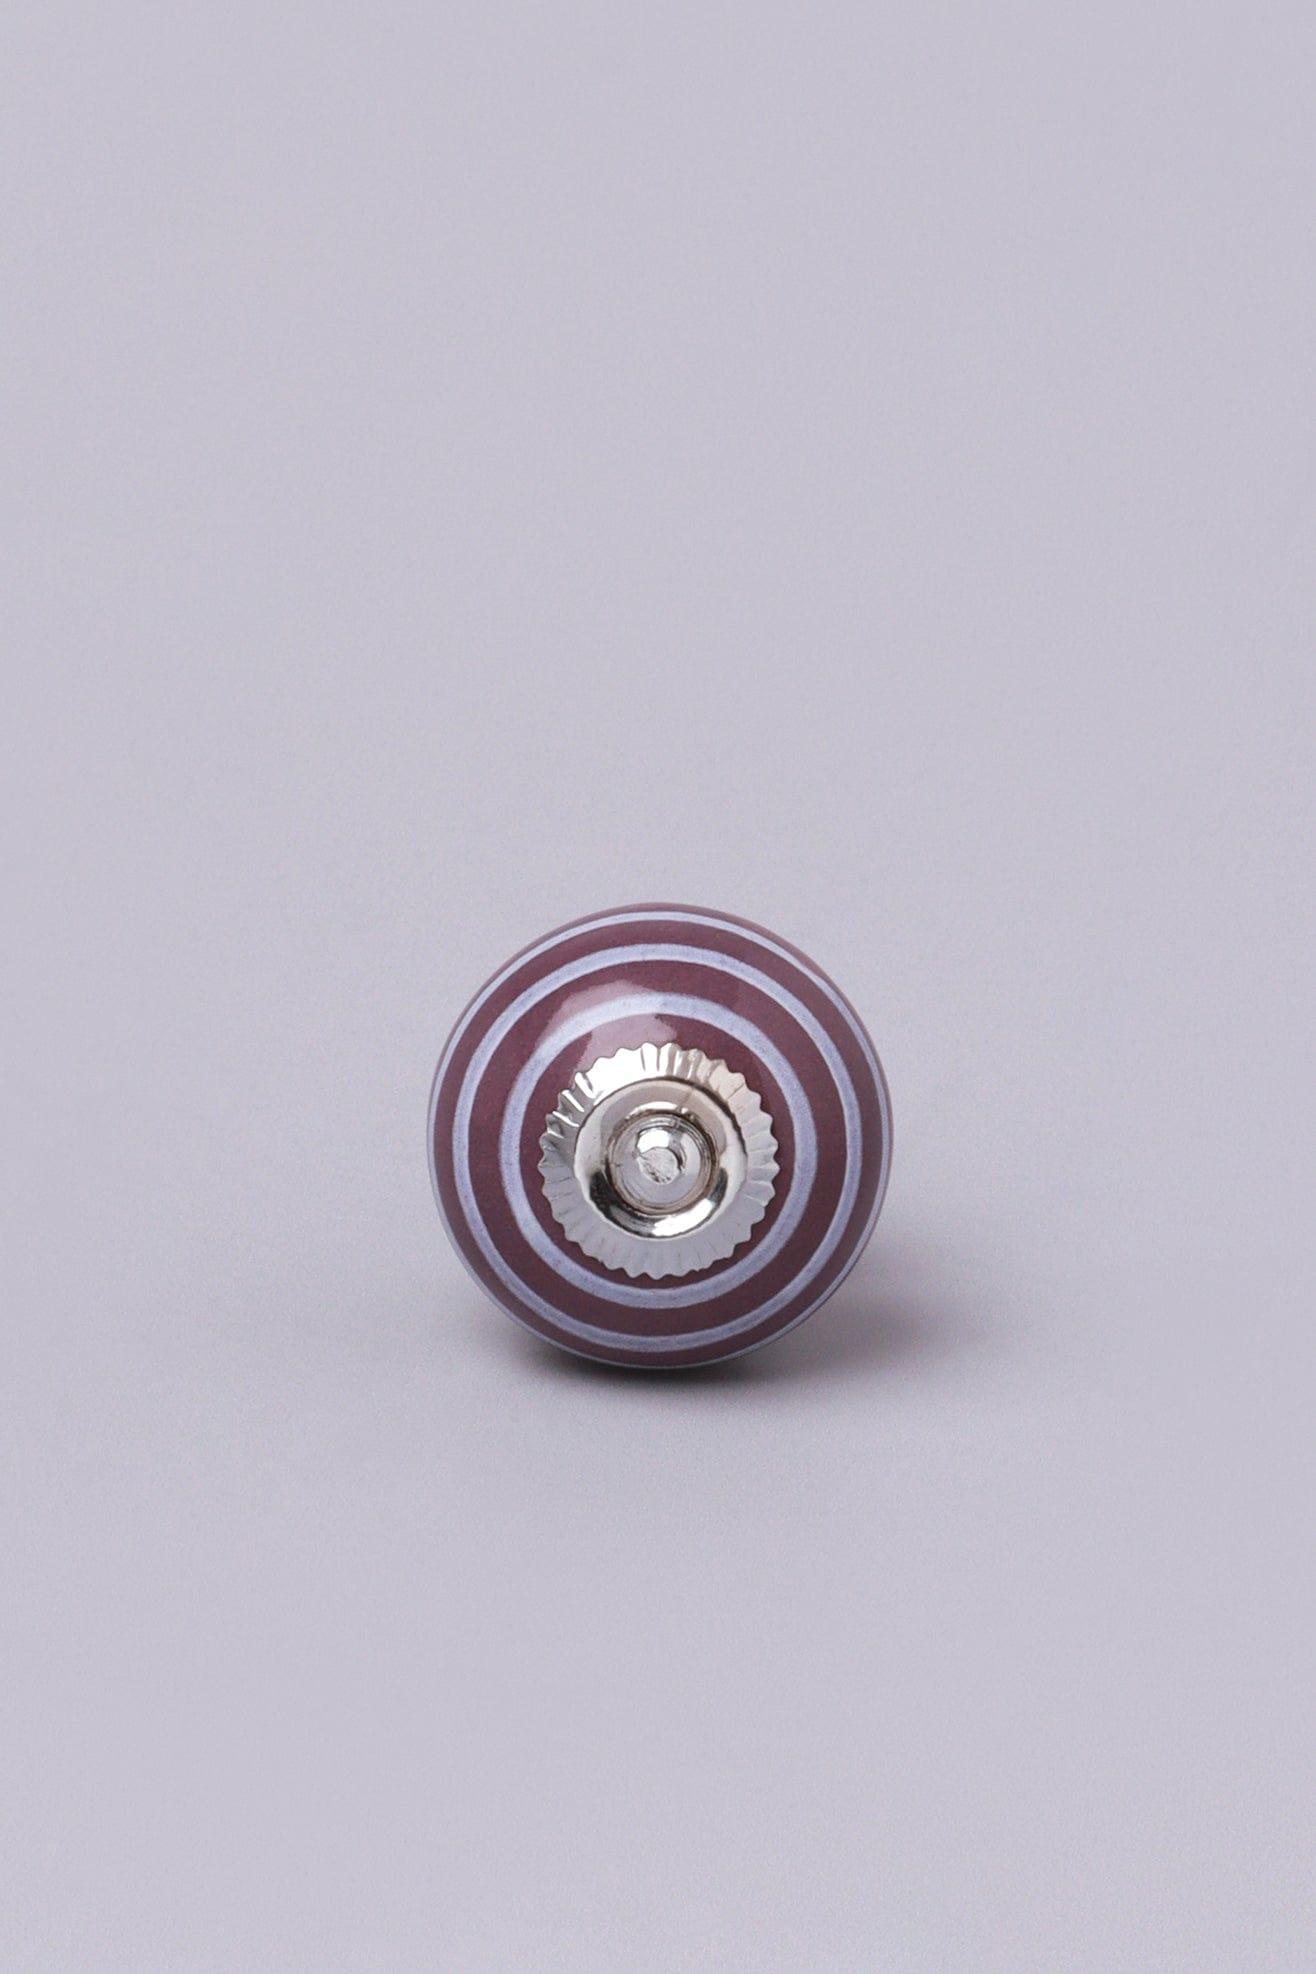 G Decor Purple Striped Ceramic Door Knobs Cupboard Pull Handles